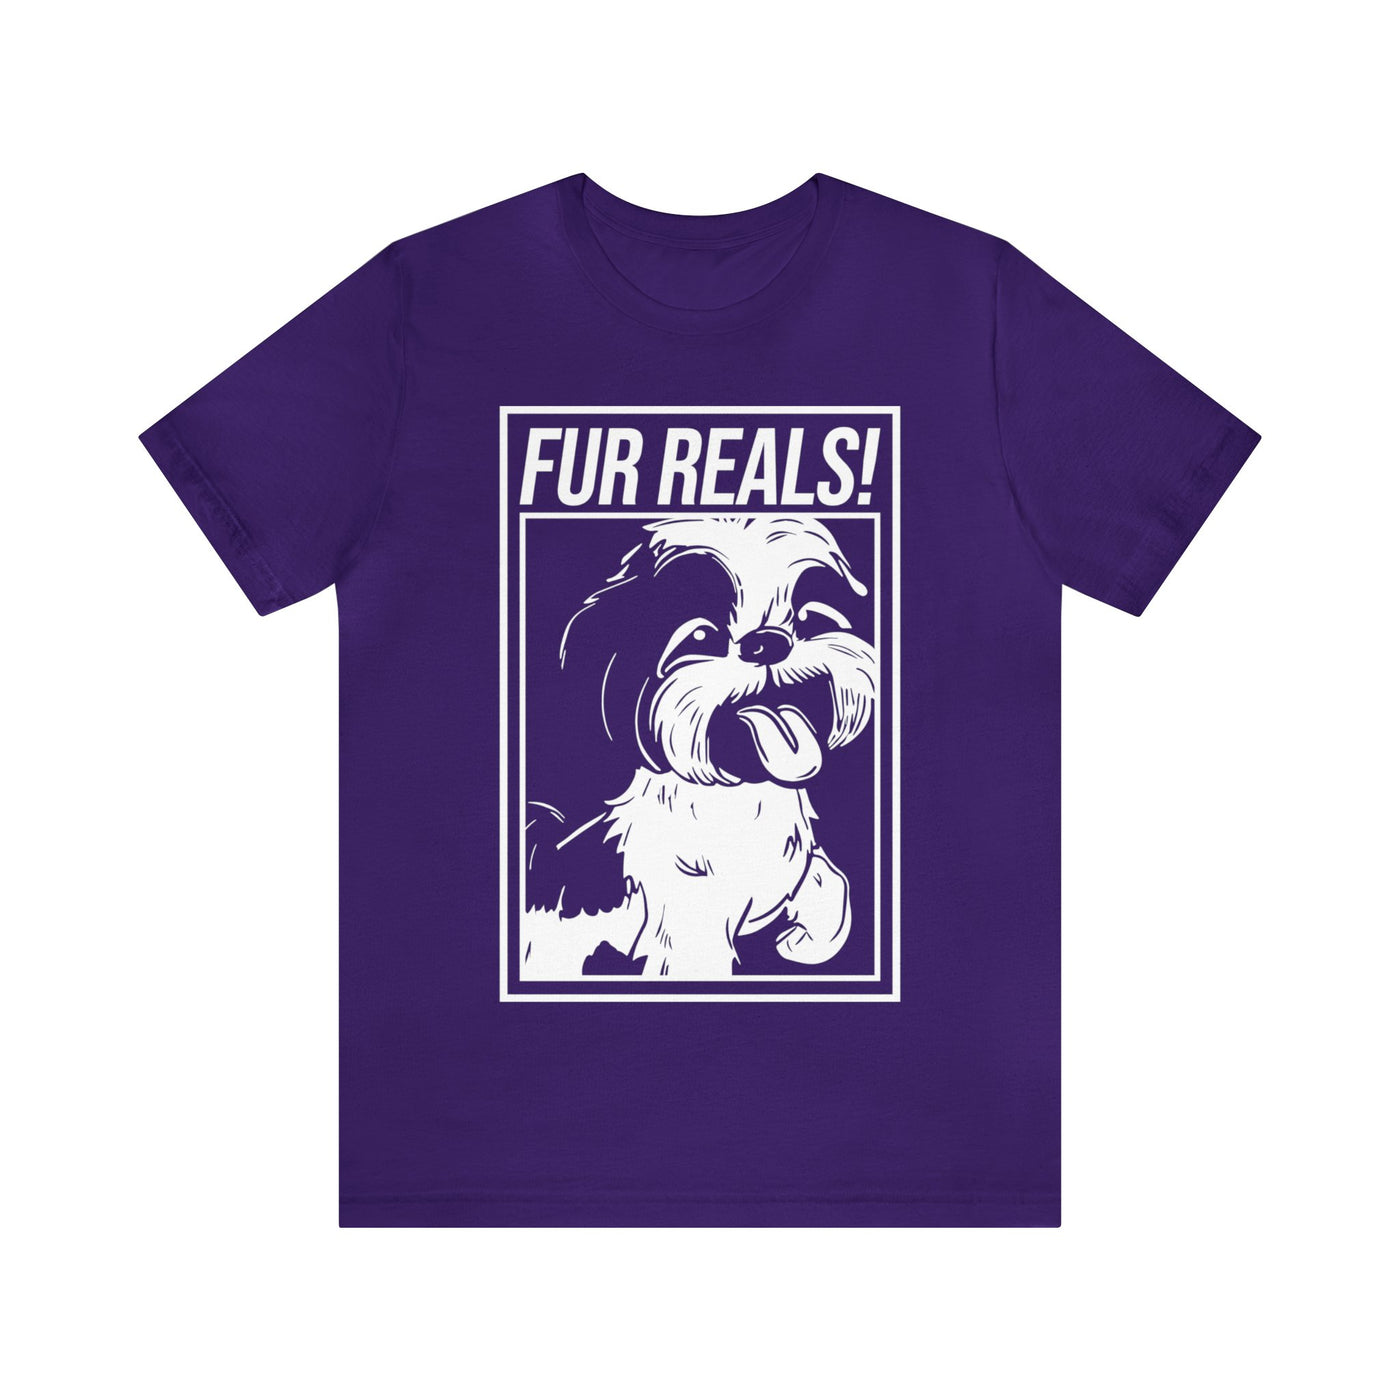 Fur Real Shih Tzu T-Shirt